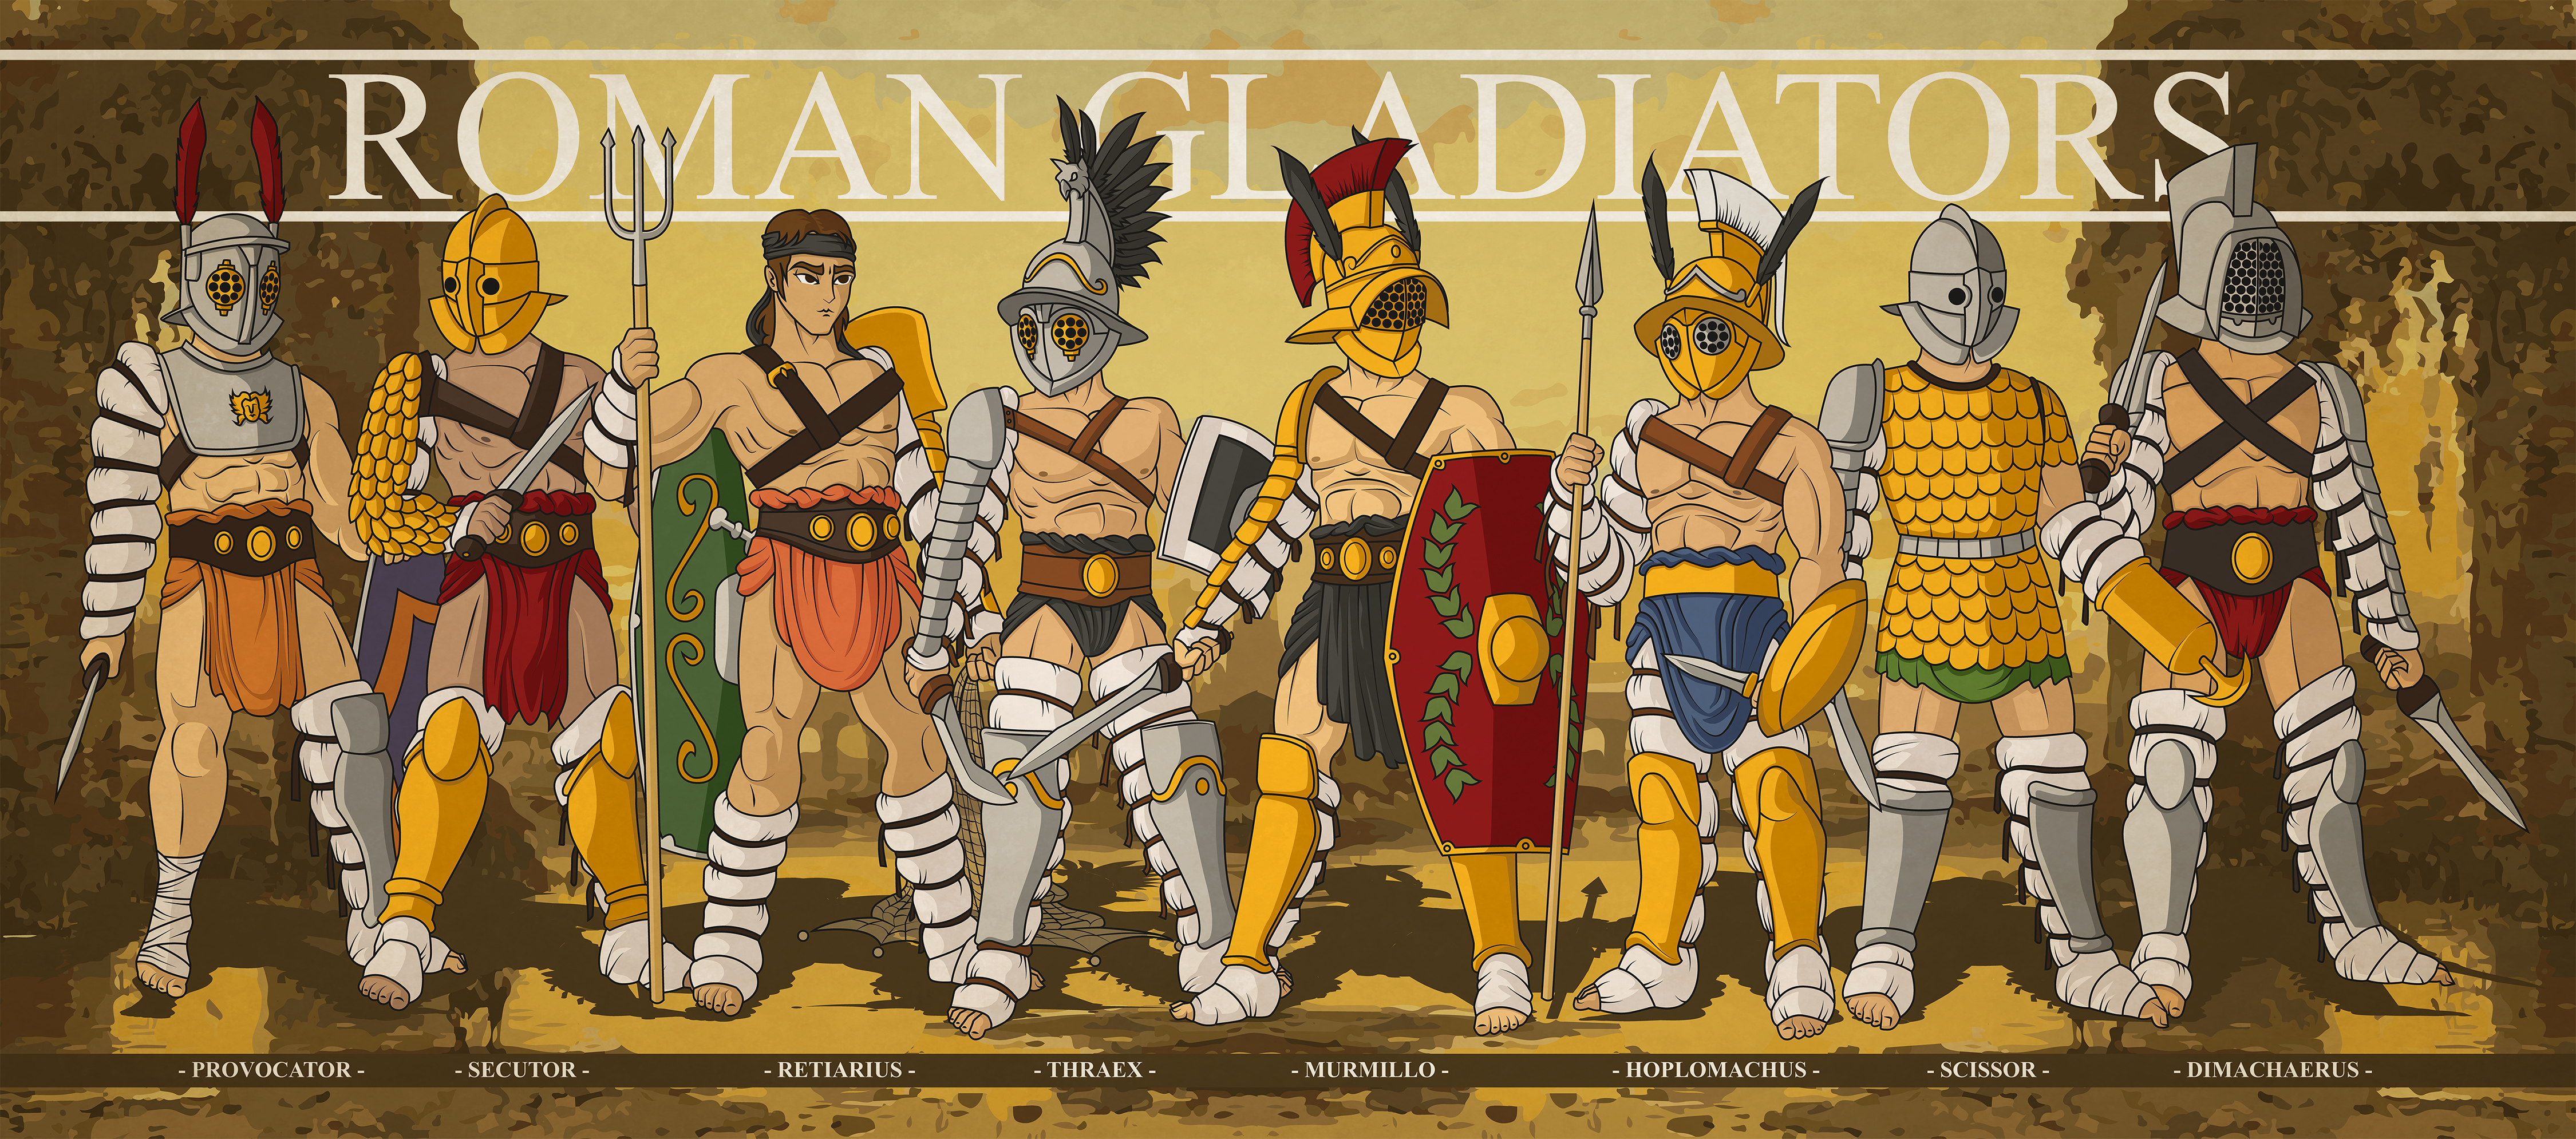 Roman Gladiator Types by Reaprycon on DeviantArt